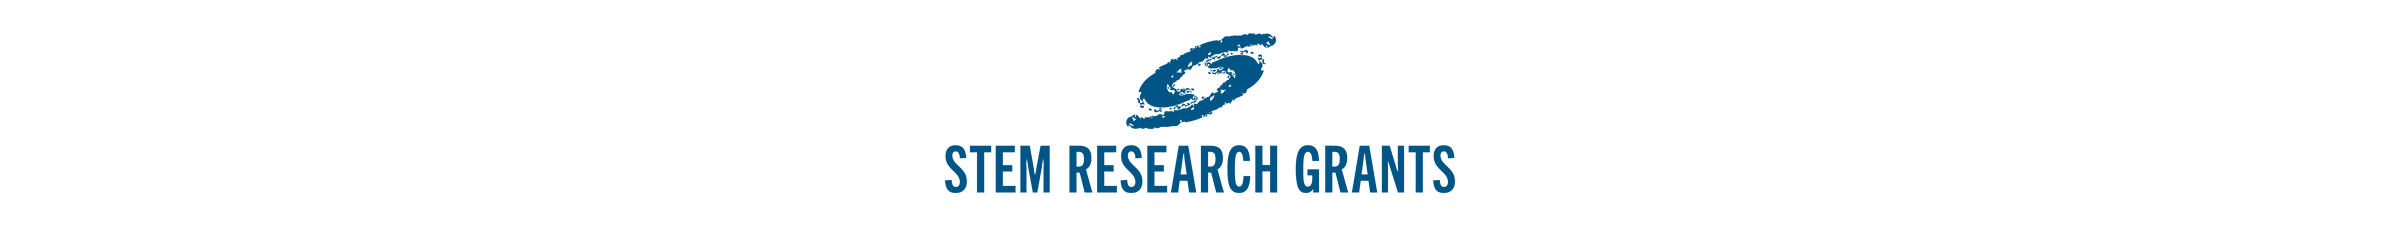 STEM Research Grants program logo